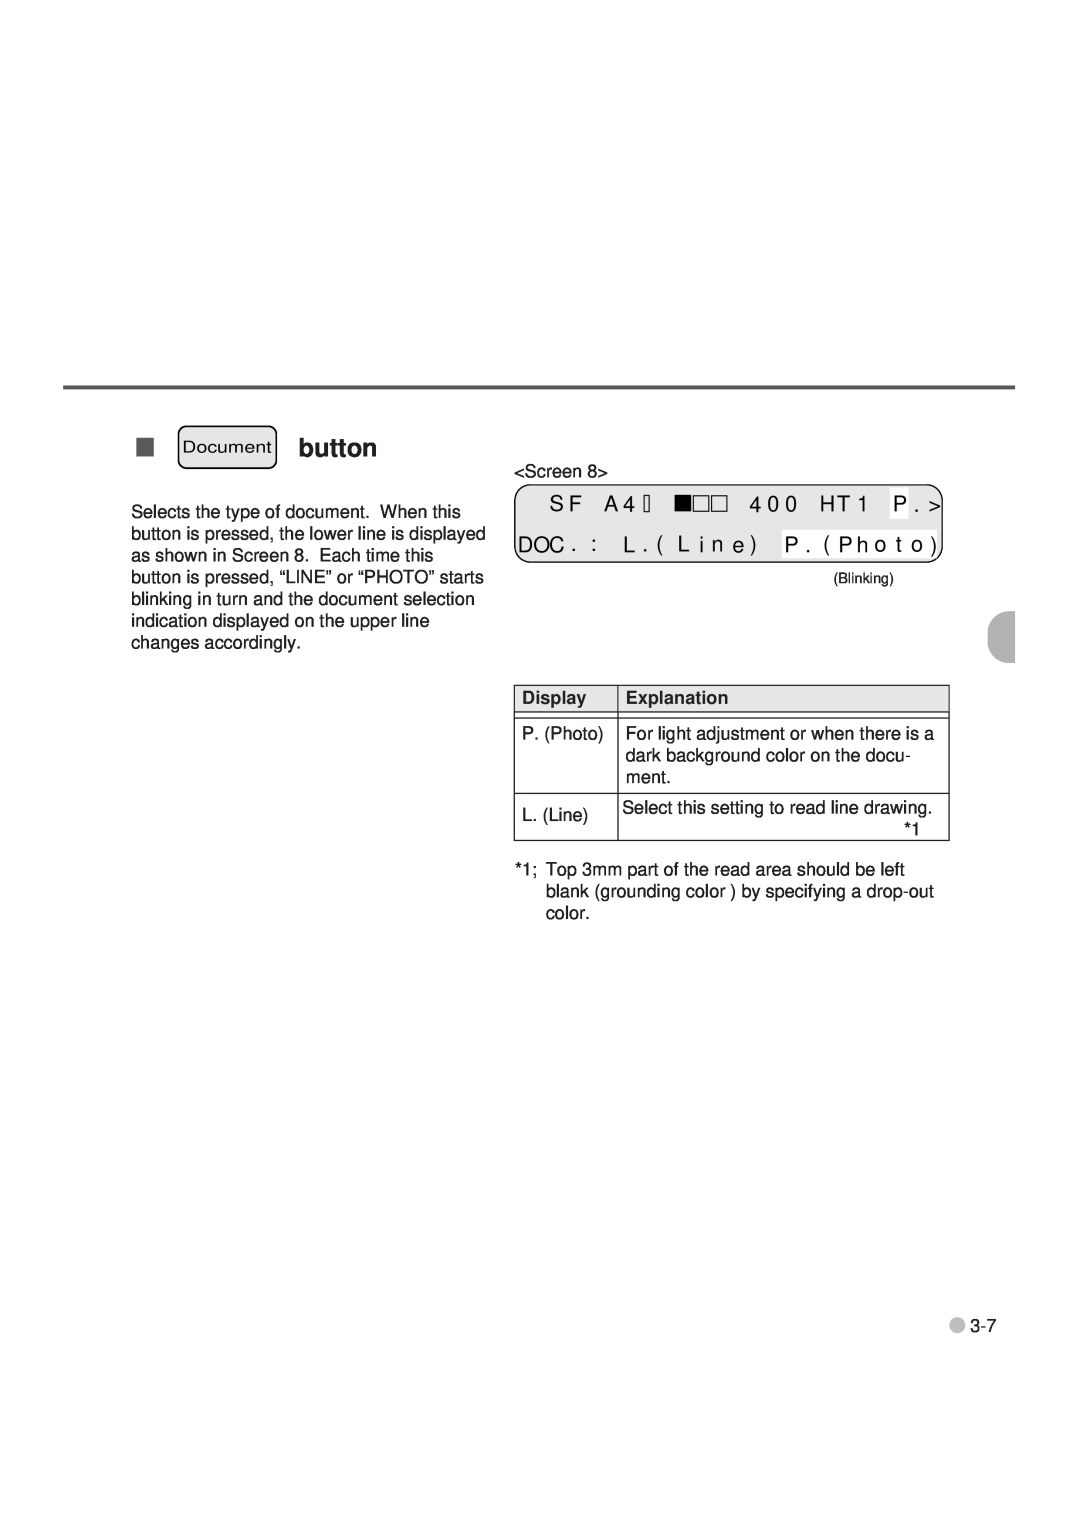 Fujitsu M3099EX, M3099GX, M3099GH, M3099EH manual Display, Explanation, Document button 